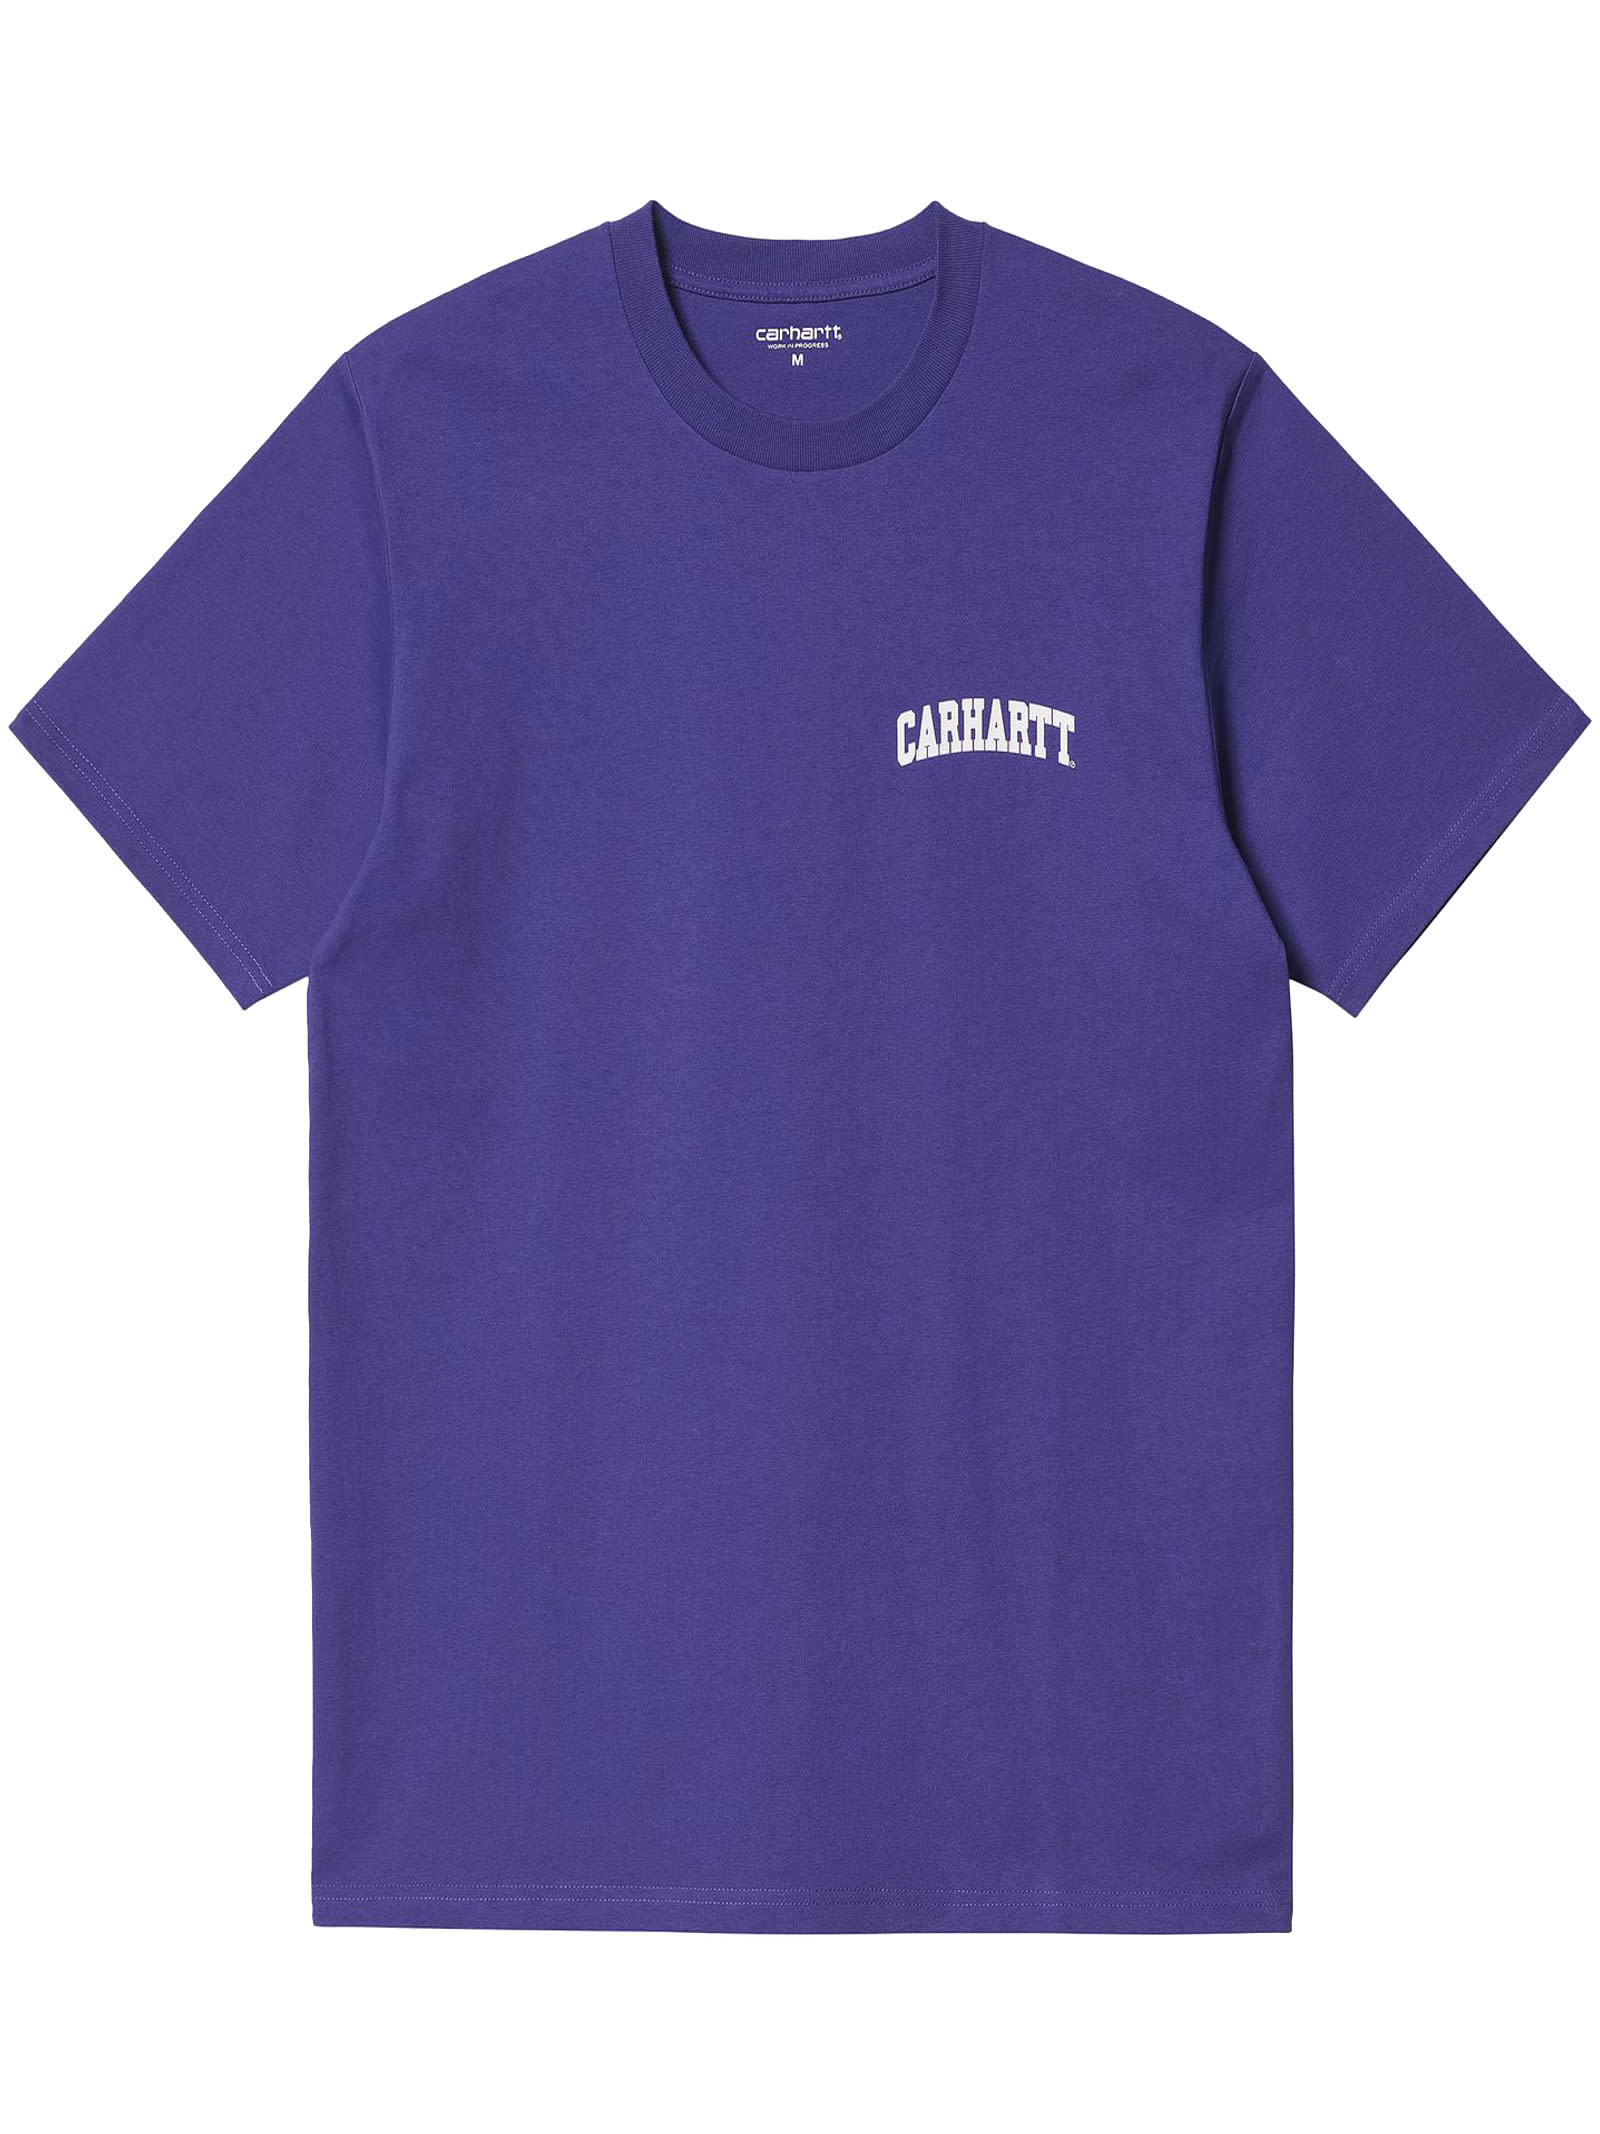 Carhartt Purple Cotton T-shirt